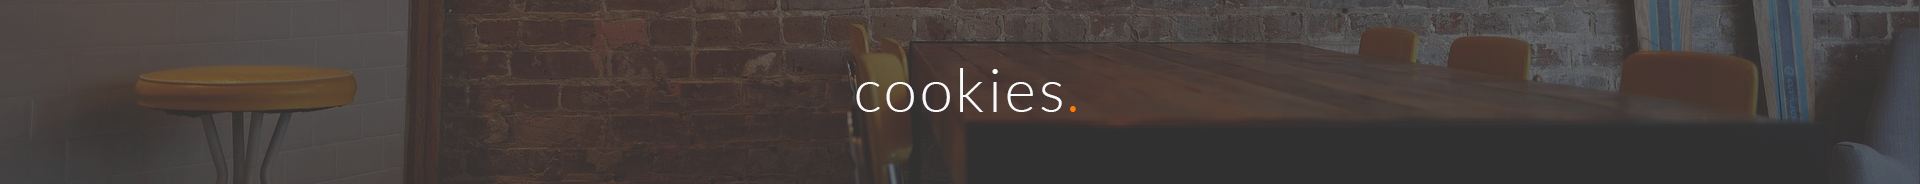 banner-cookies.png